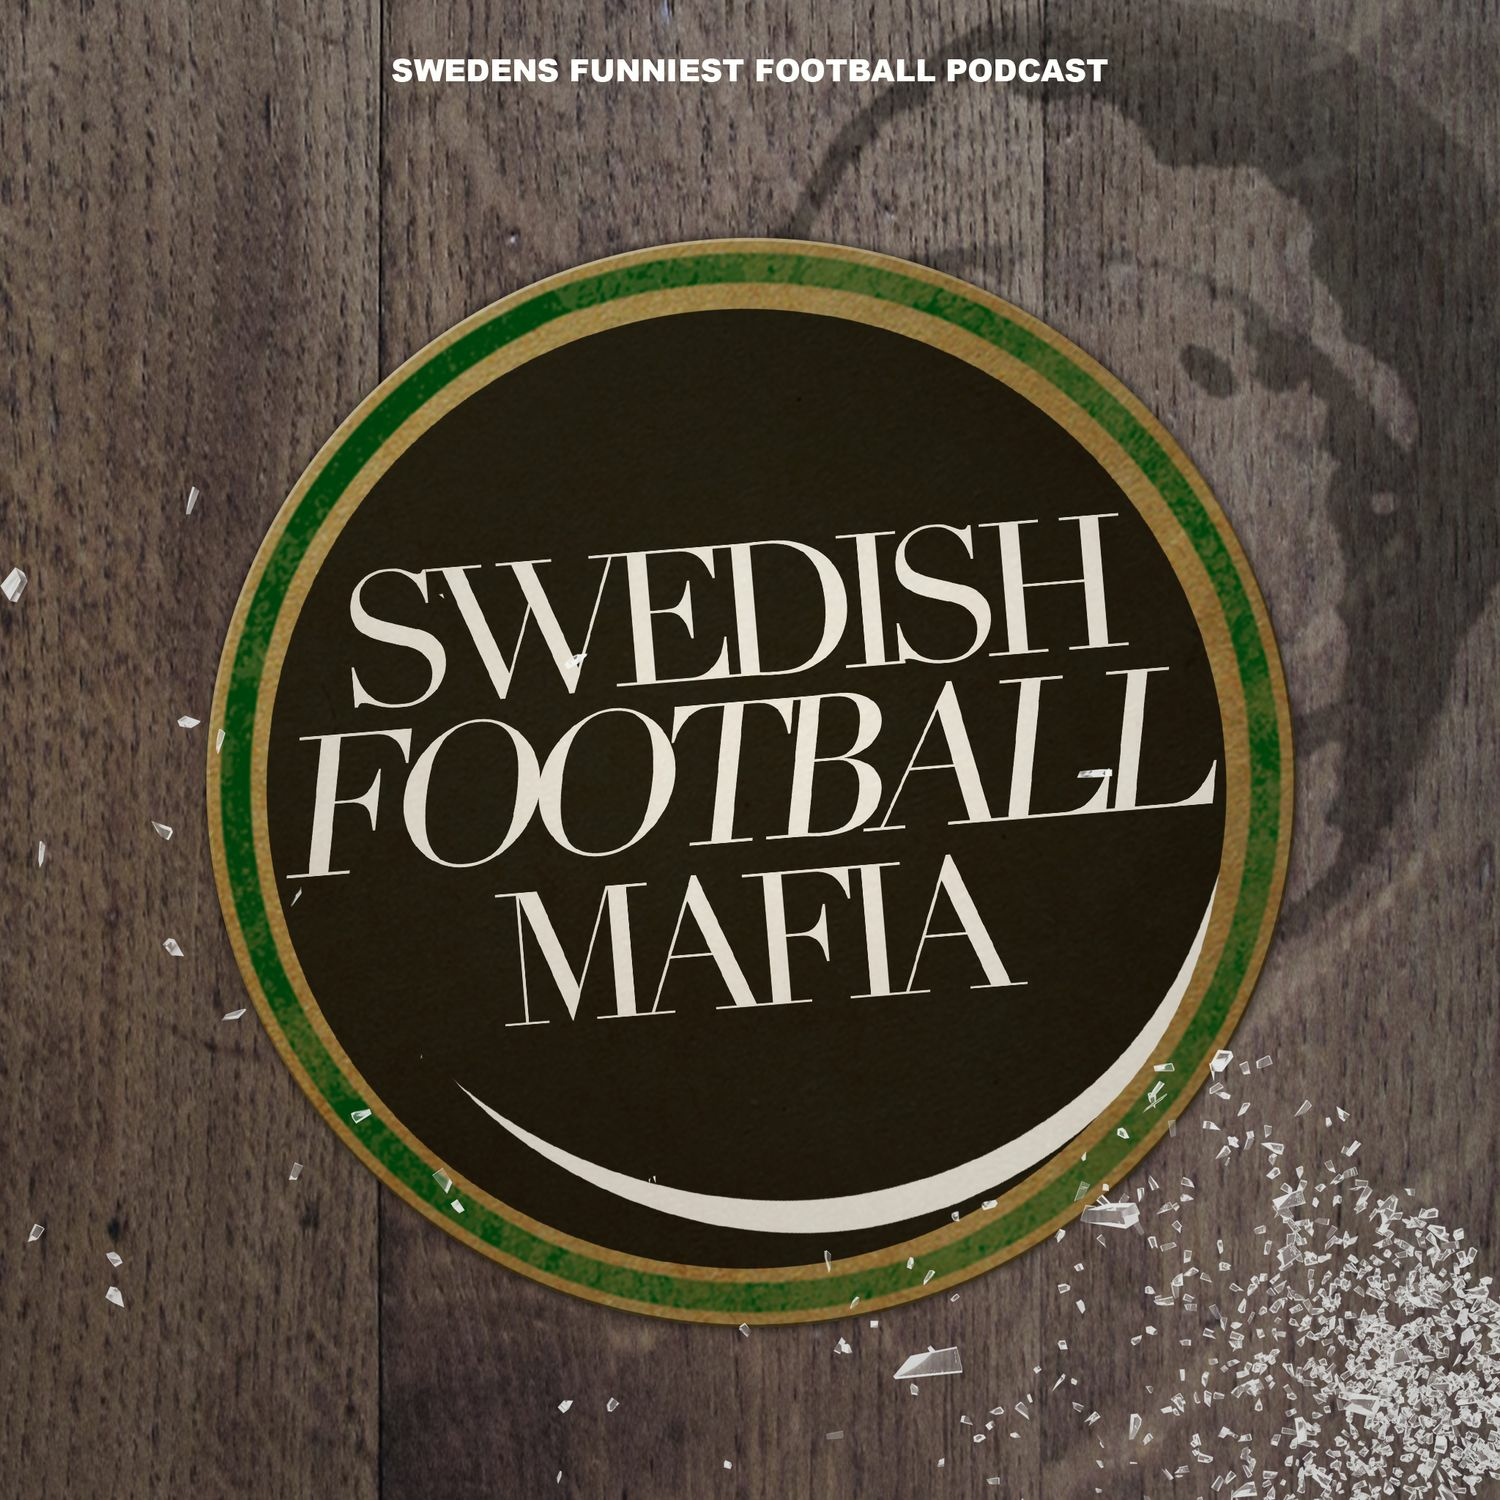 Swedish Football Mafia is no longer